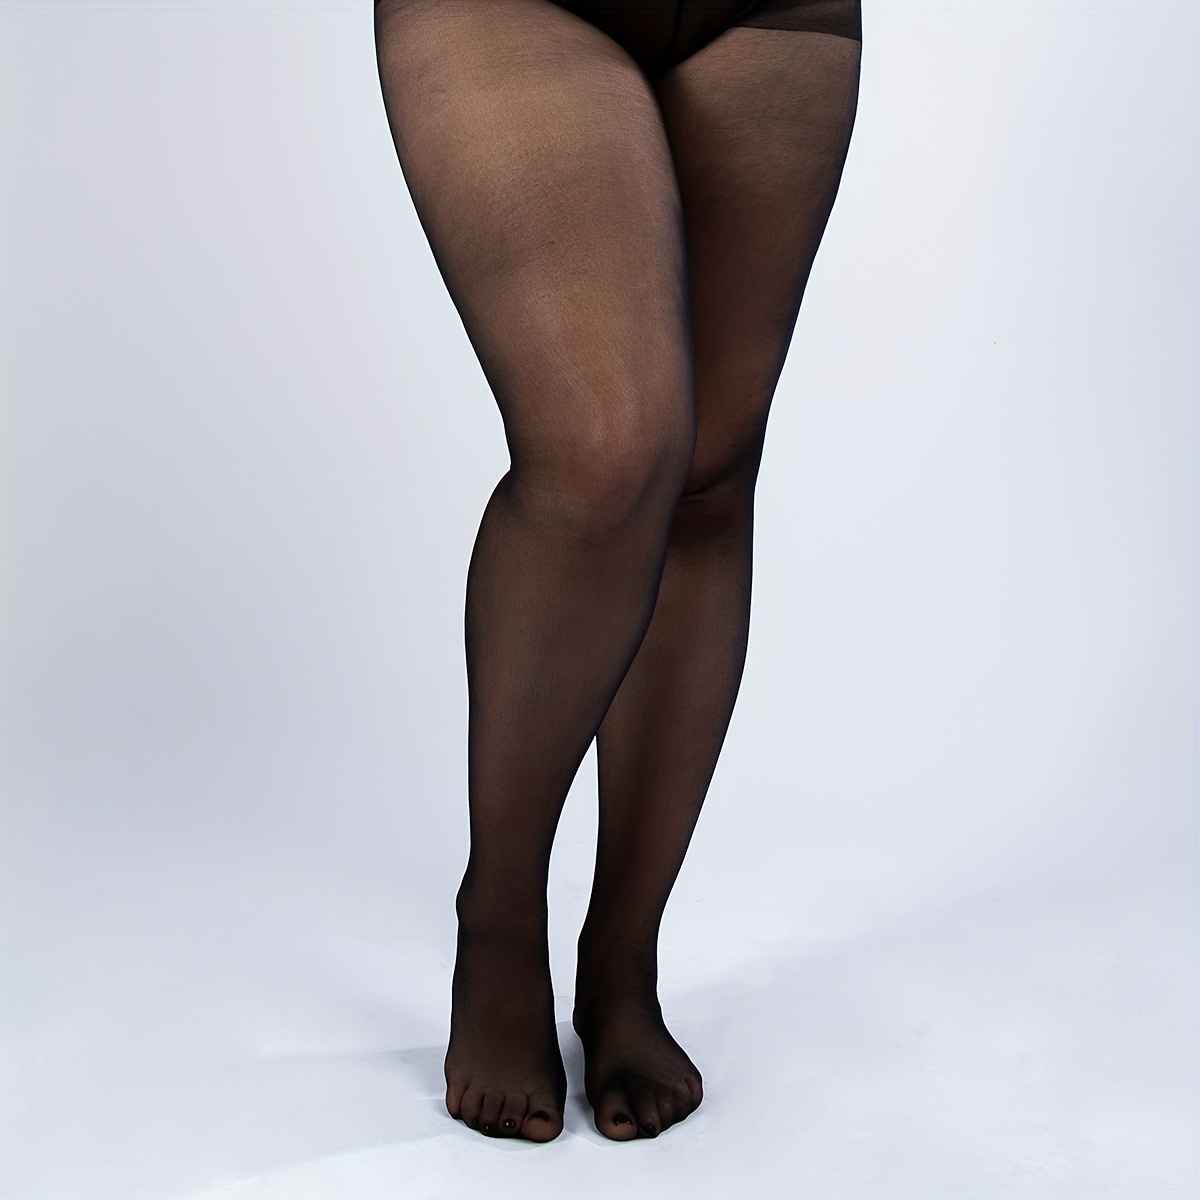 Plus Size, Women's Opaque Tights, Black, 120D